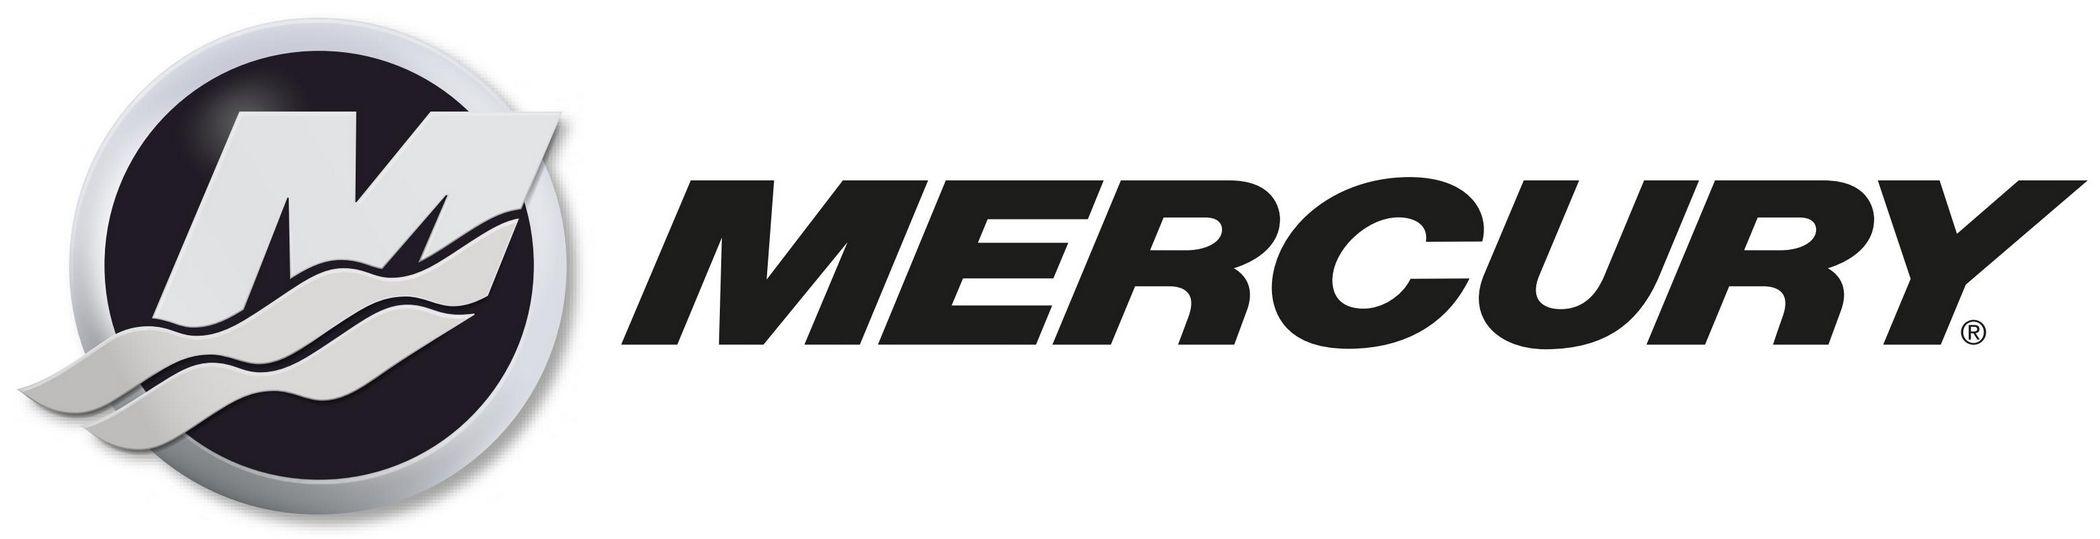 Mercruiser Logo - mercury-logo - Pro Boats